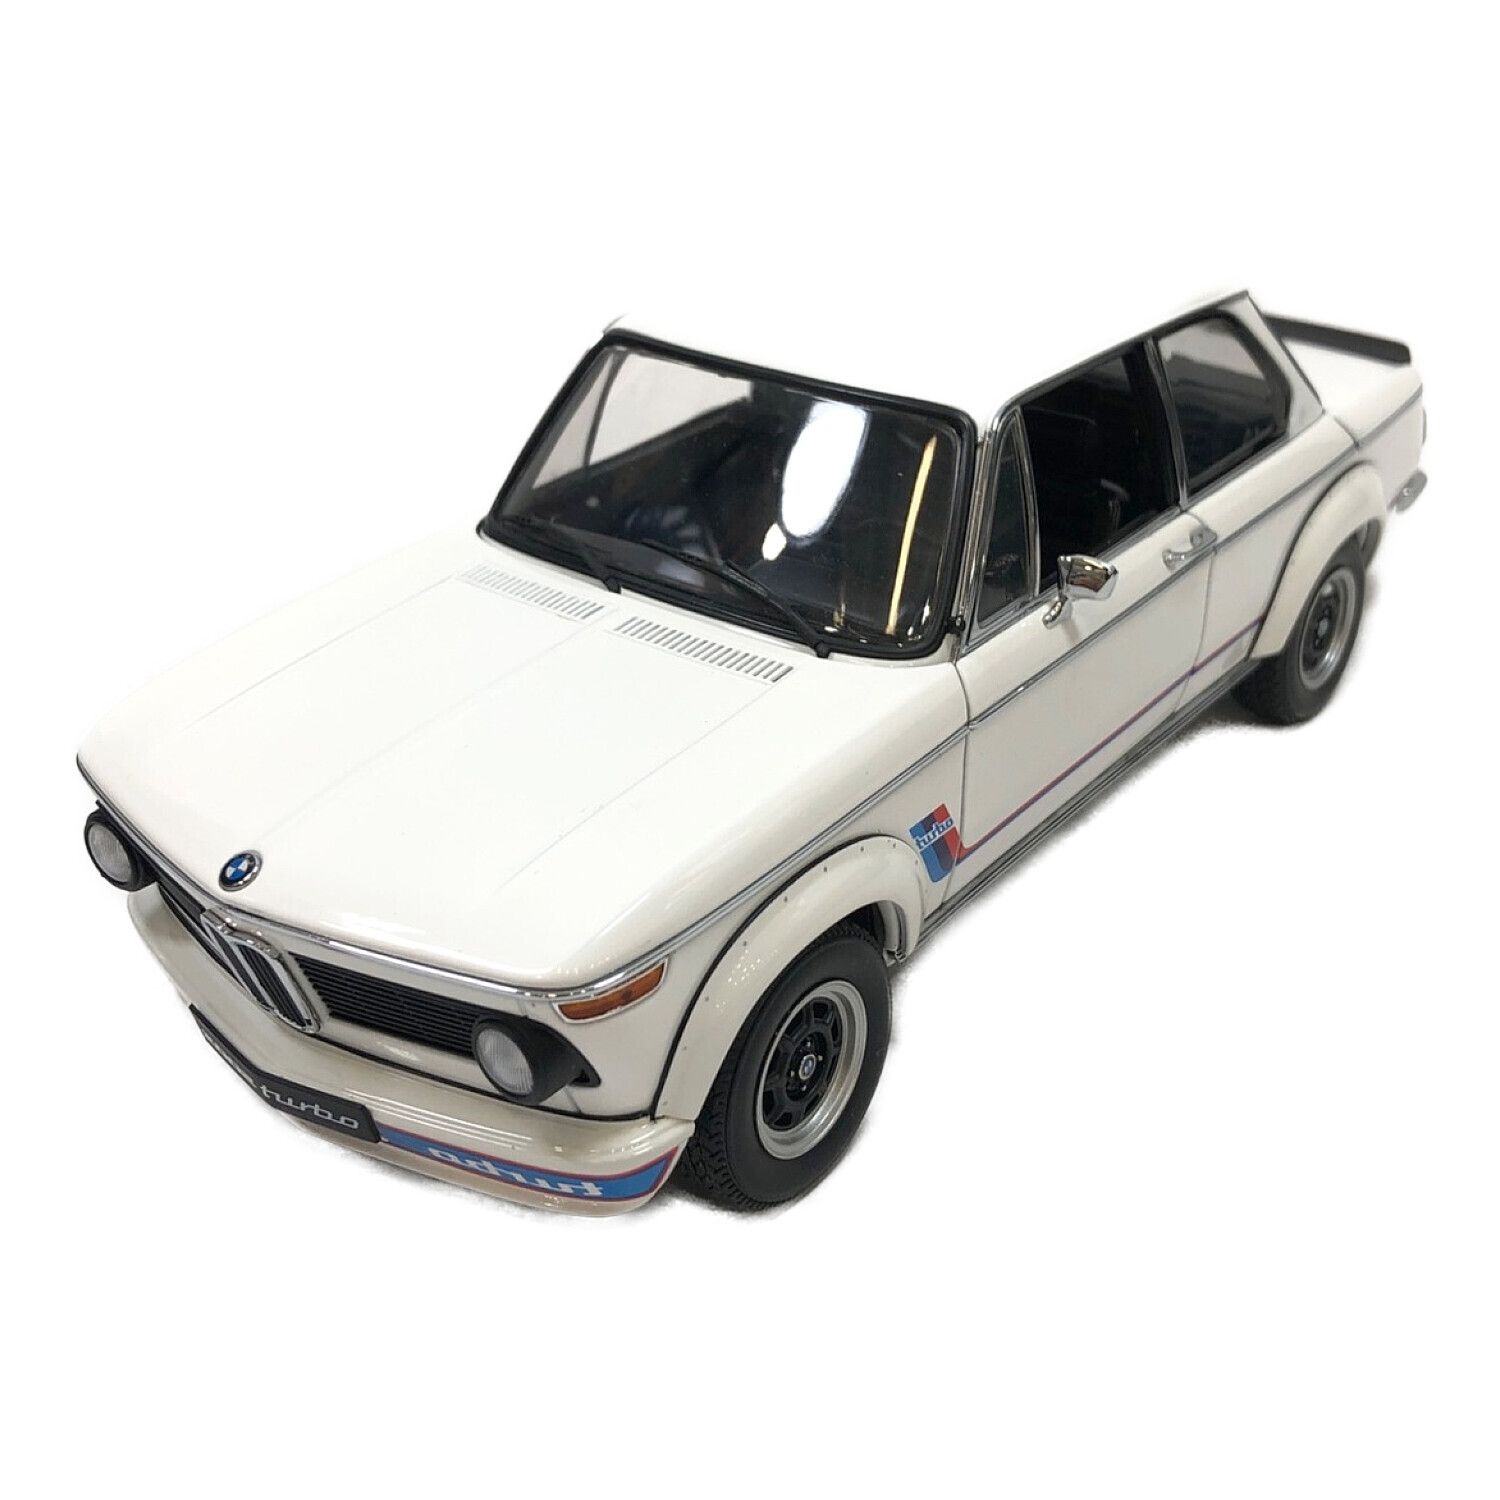 AUTOart (オートアート) ミニカー 1/18 BMW 2002 turbo 1973(ホワイト